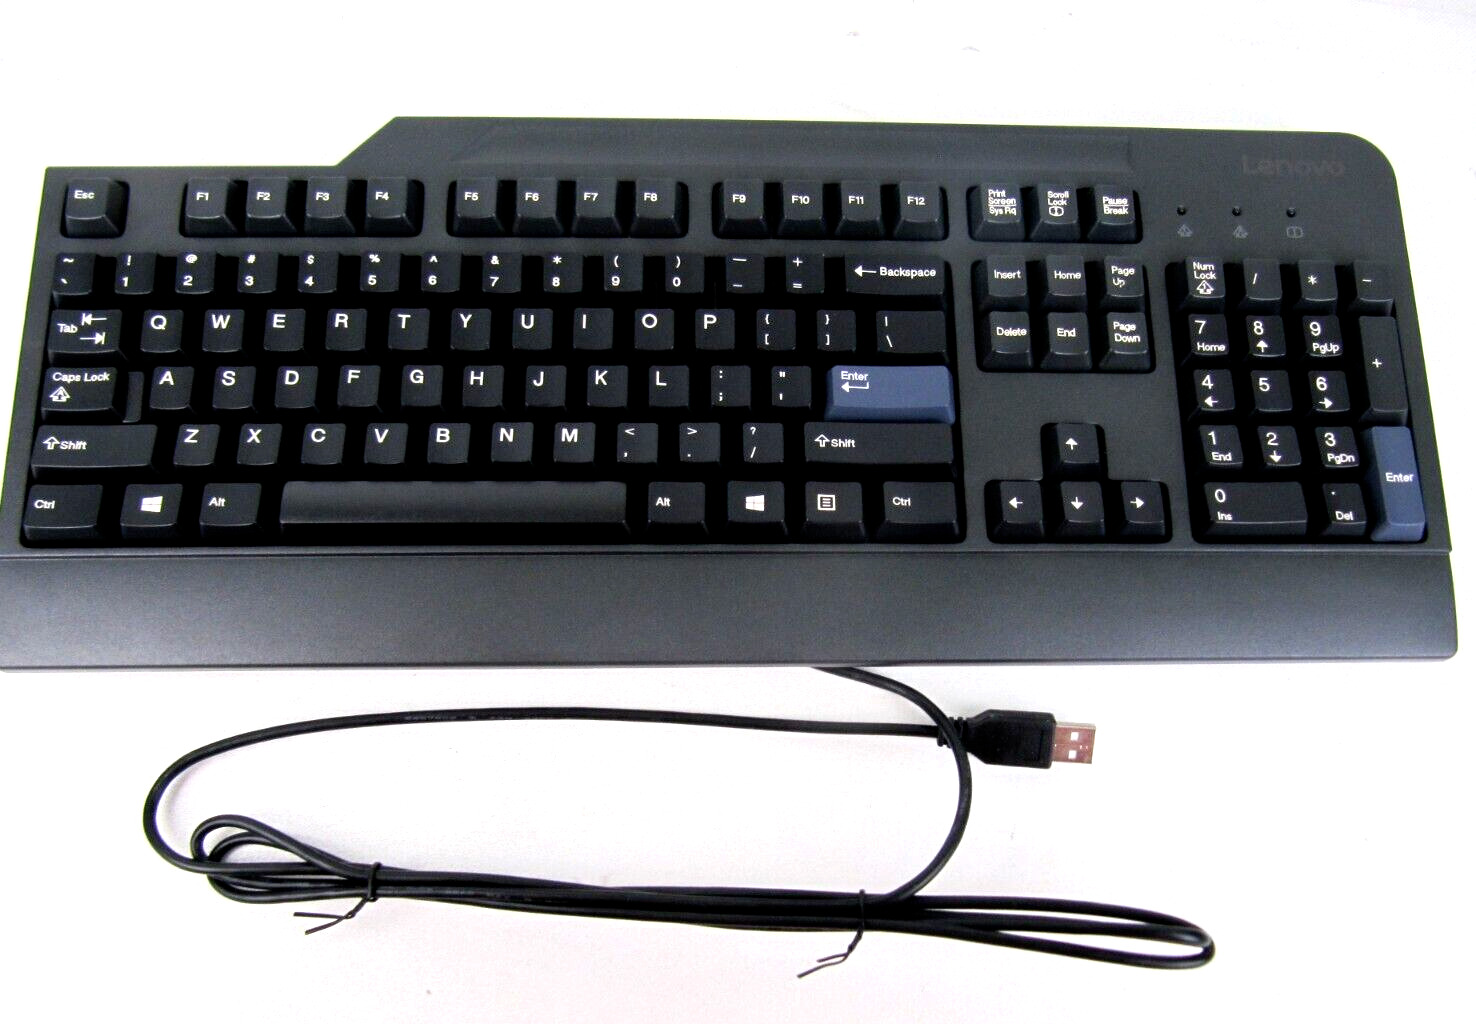 Lot of 10: New Genuine IBM Lenovo KU-0225 Black Standard USB Wired Keyboards